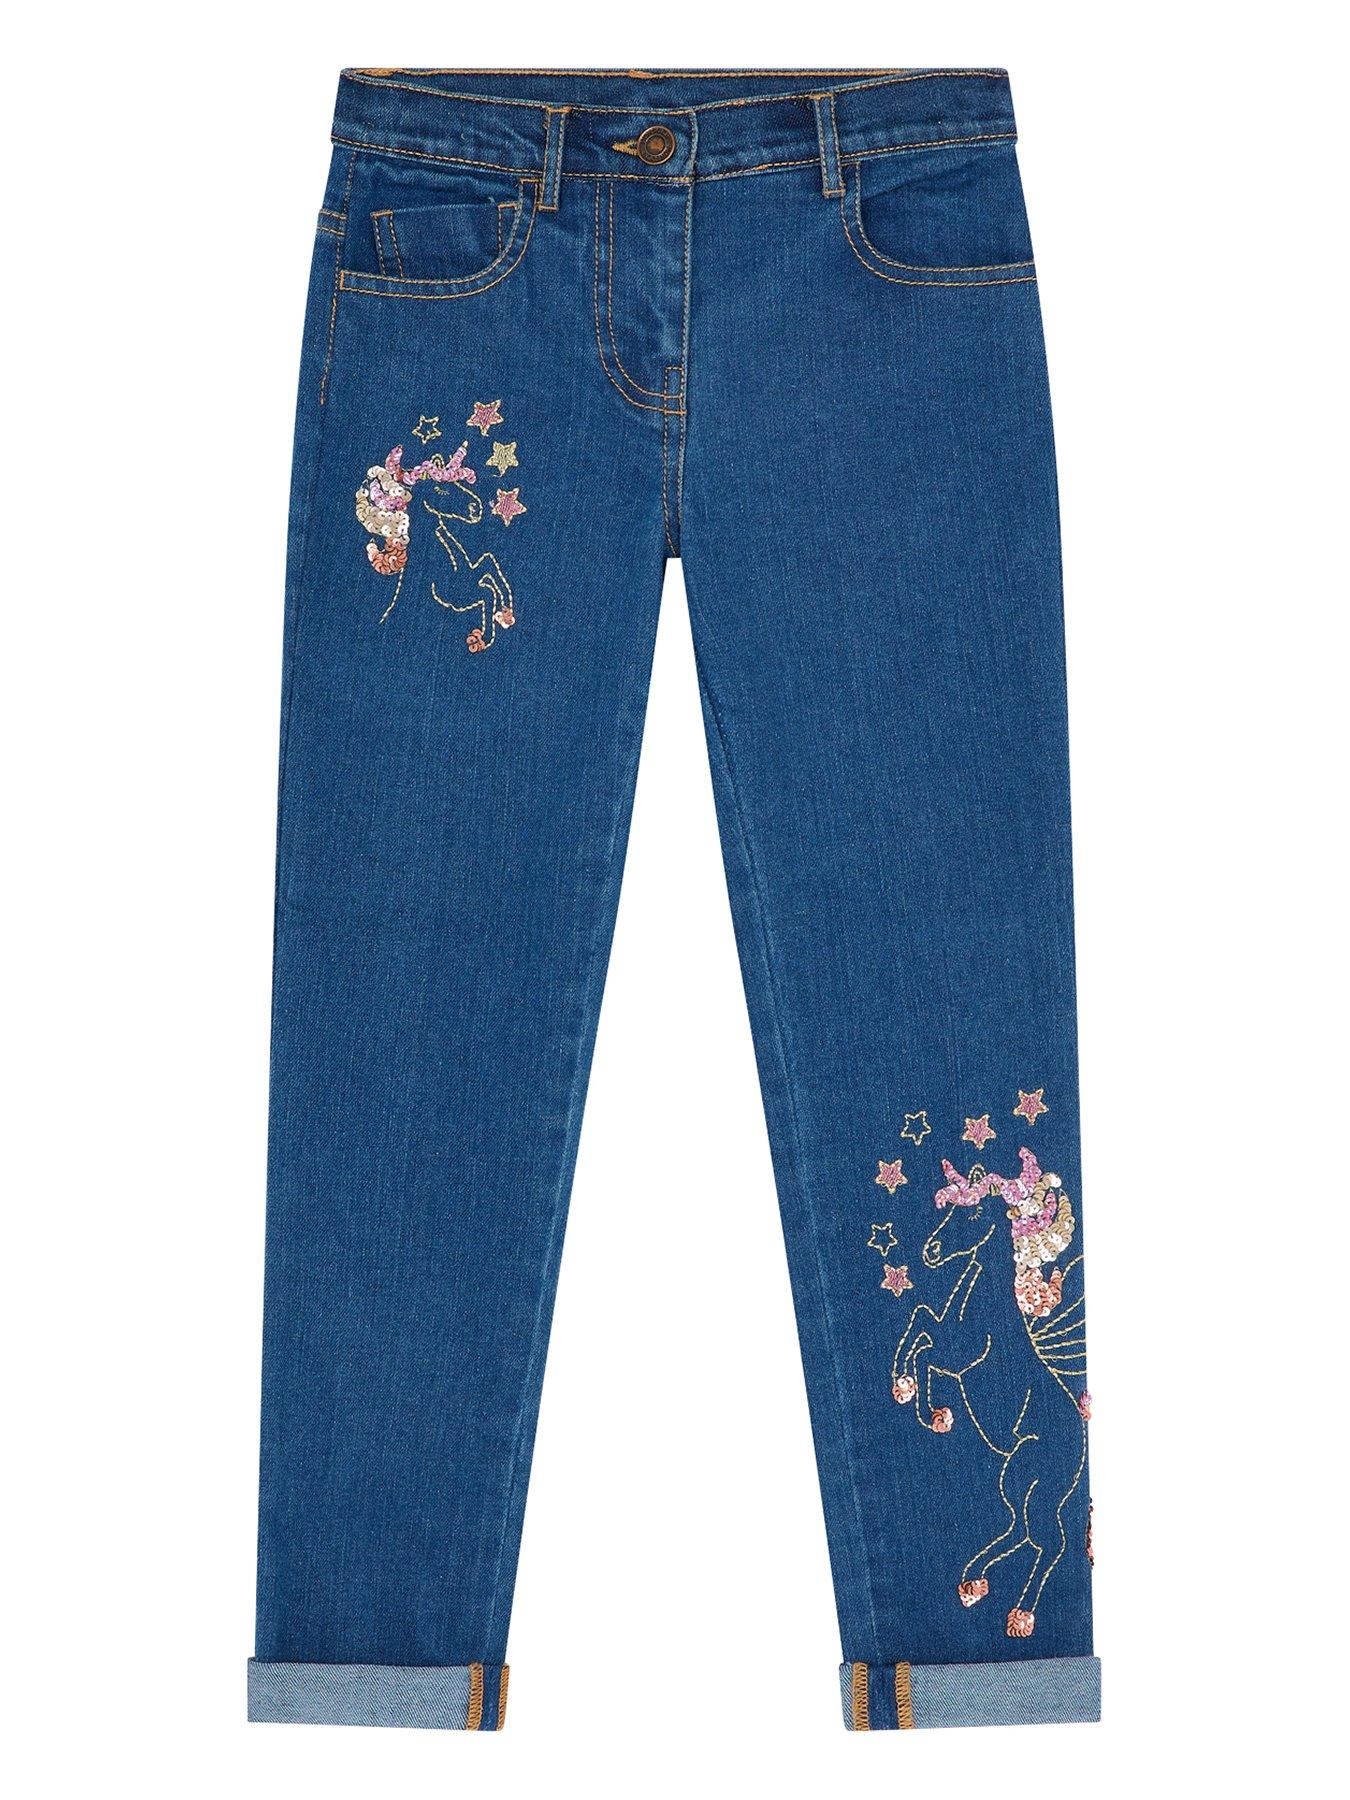 Girls Clothes Girls S.e.w. Embellished Unicorn Jeans - Blue